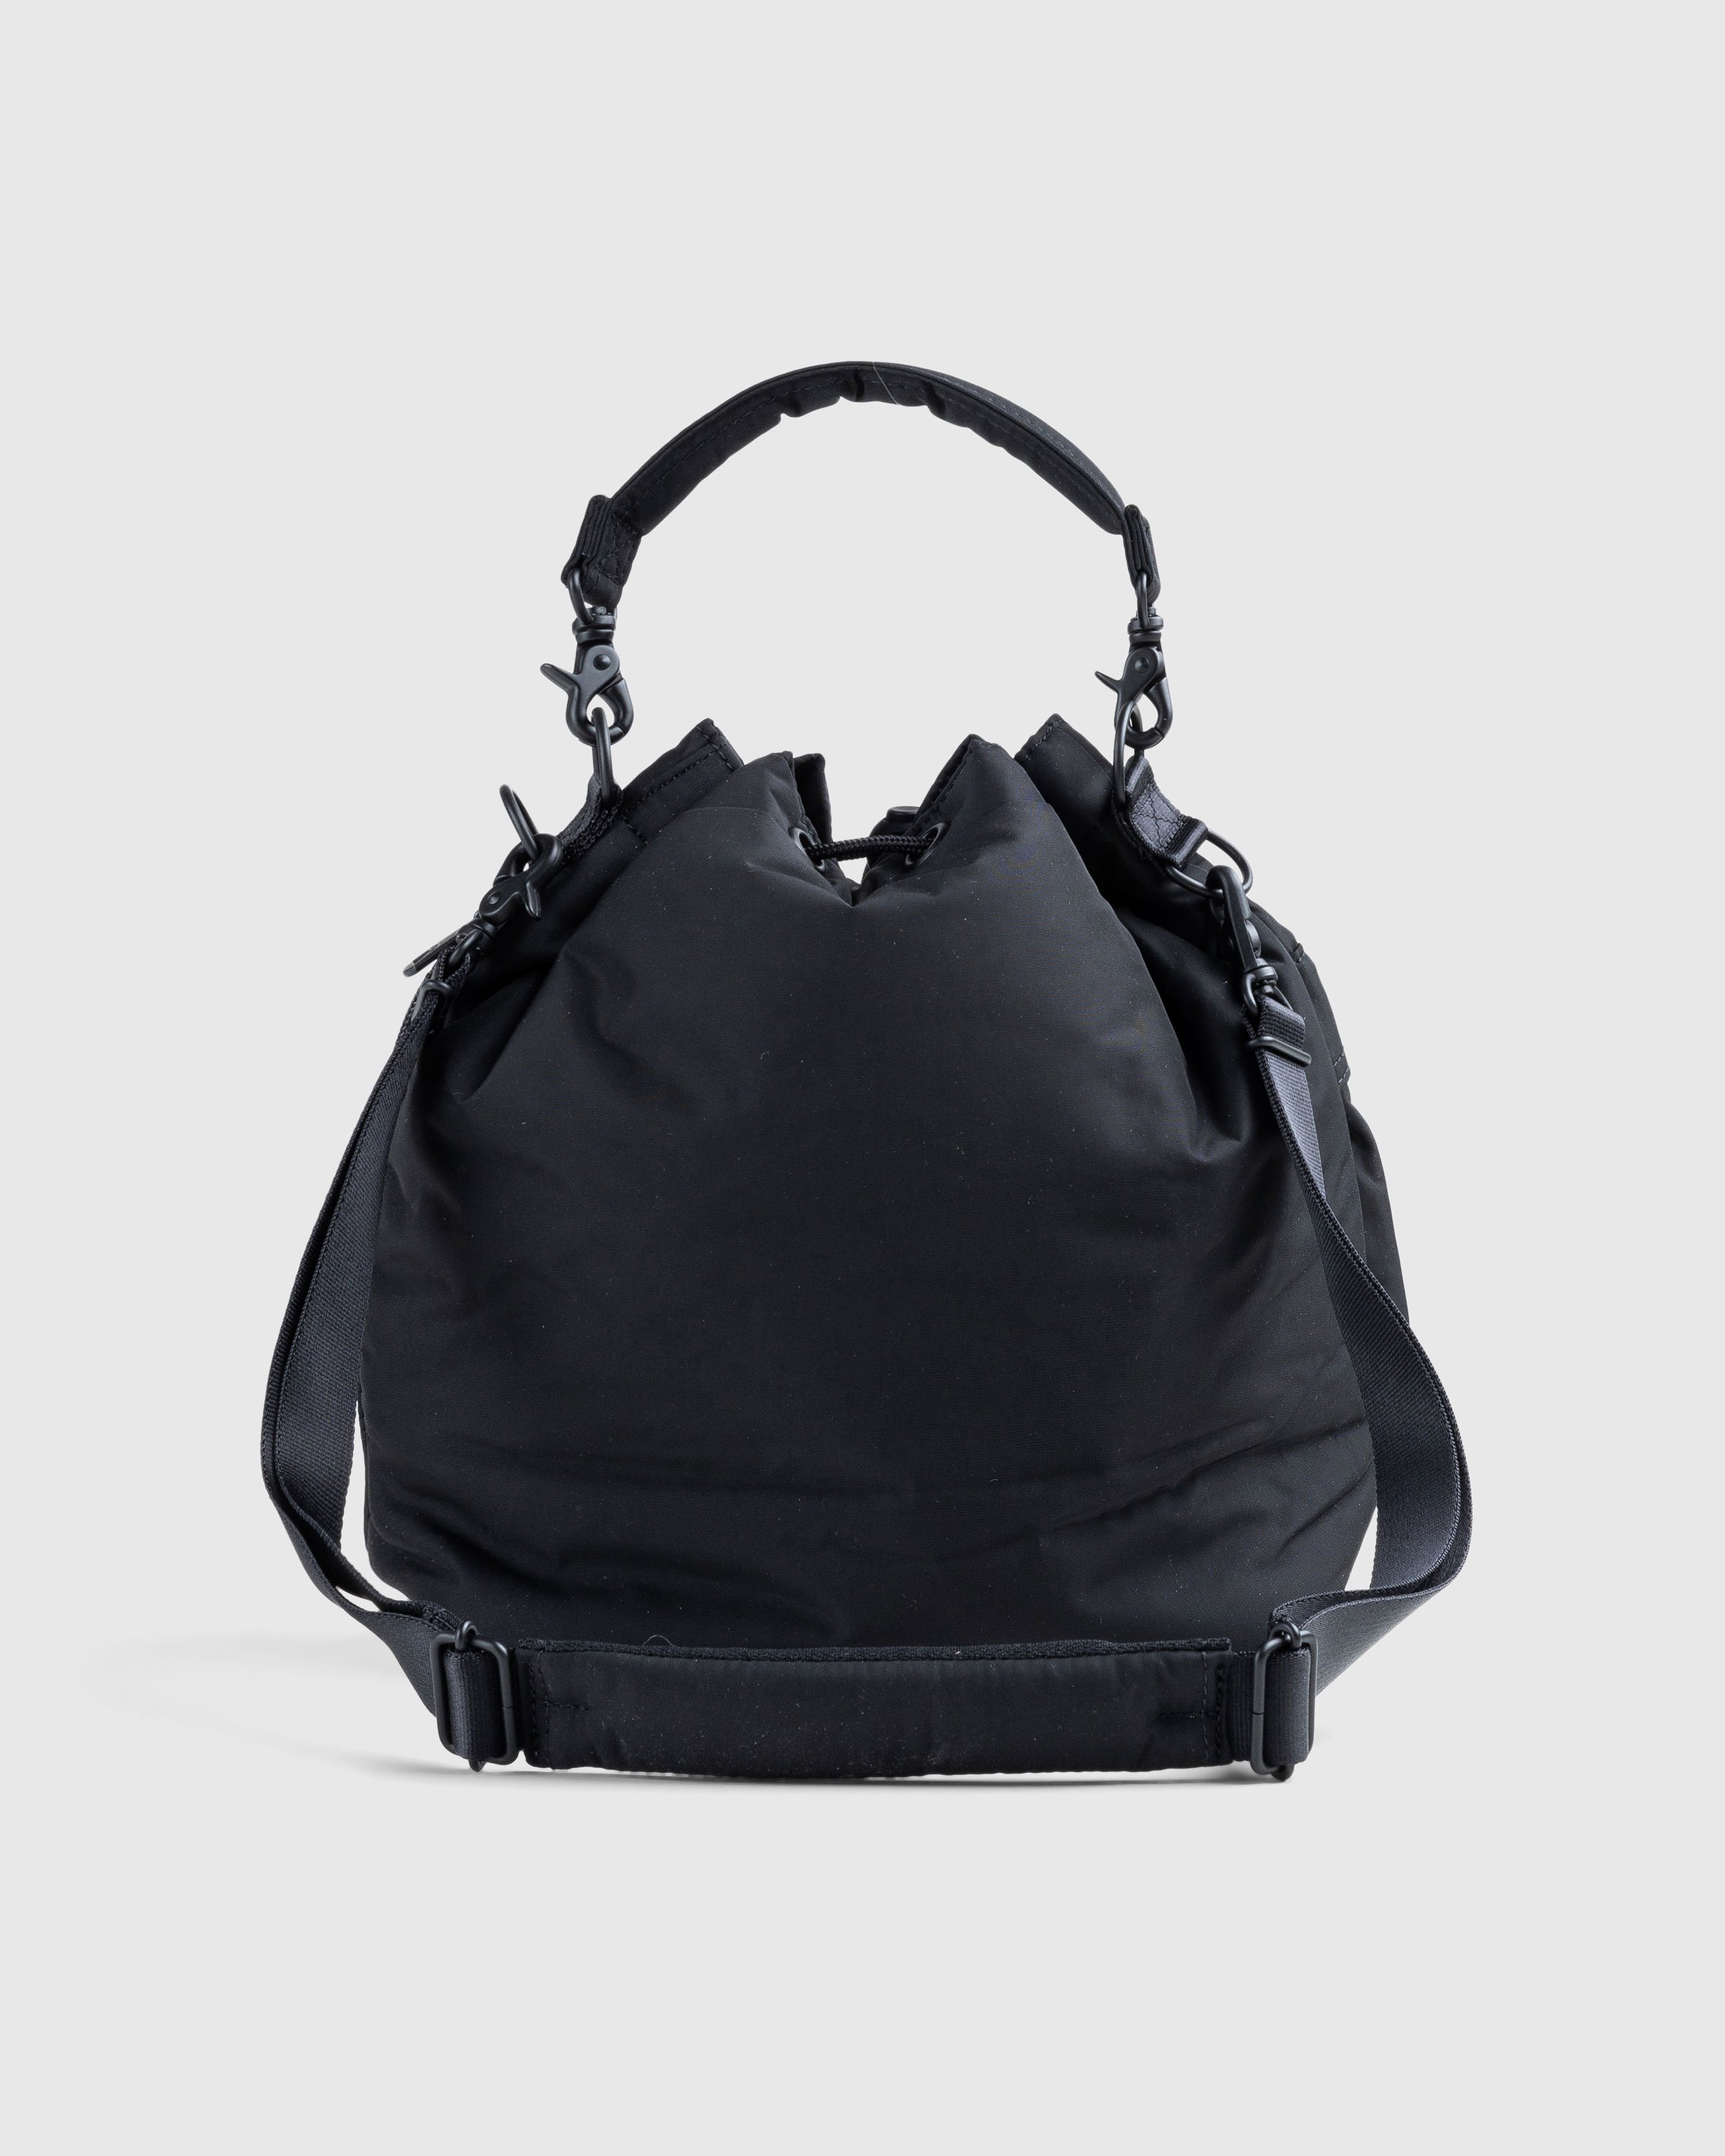 Porter-Yoshida & Co. - SENSES TOOL BAG - Accessories - Black - Image 2